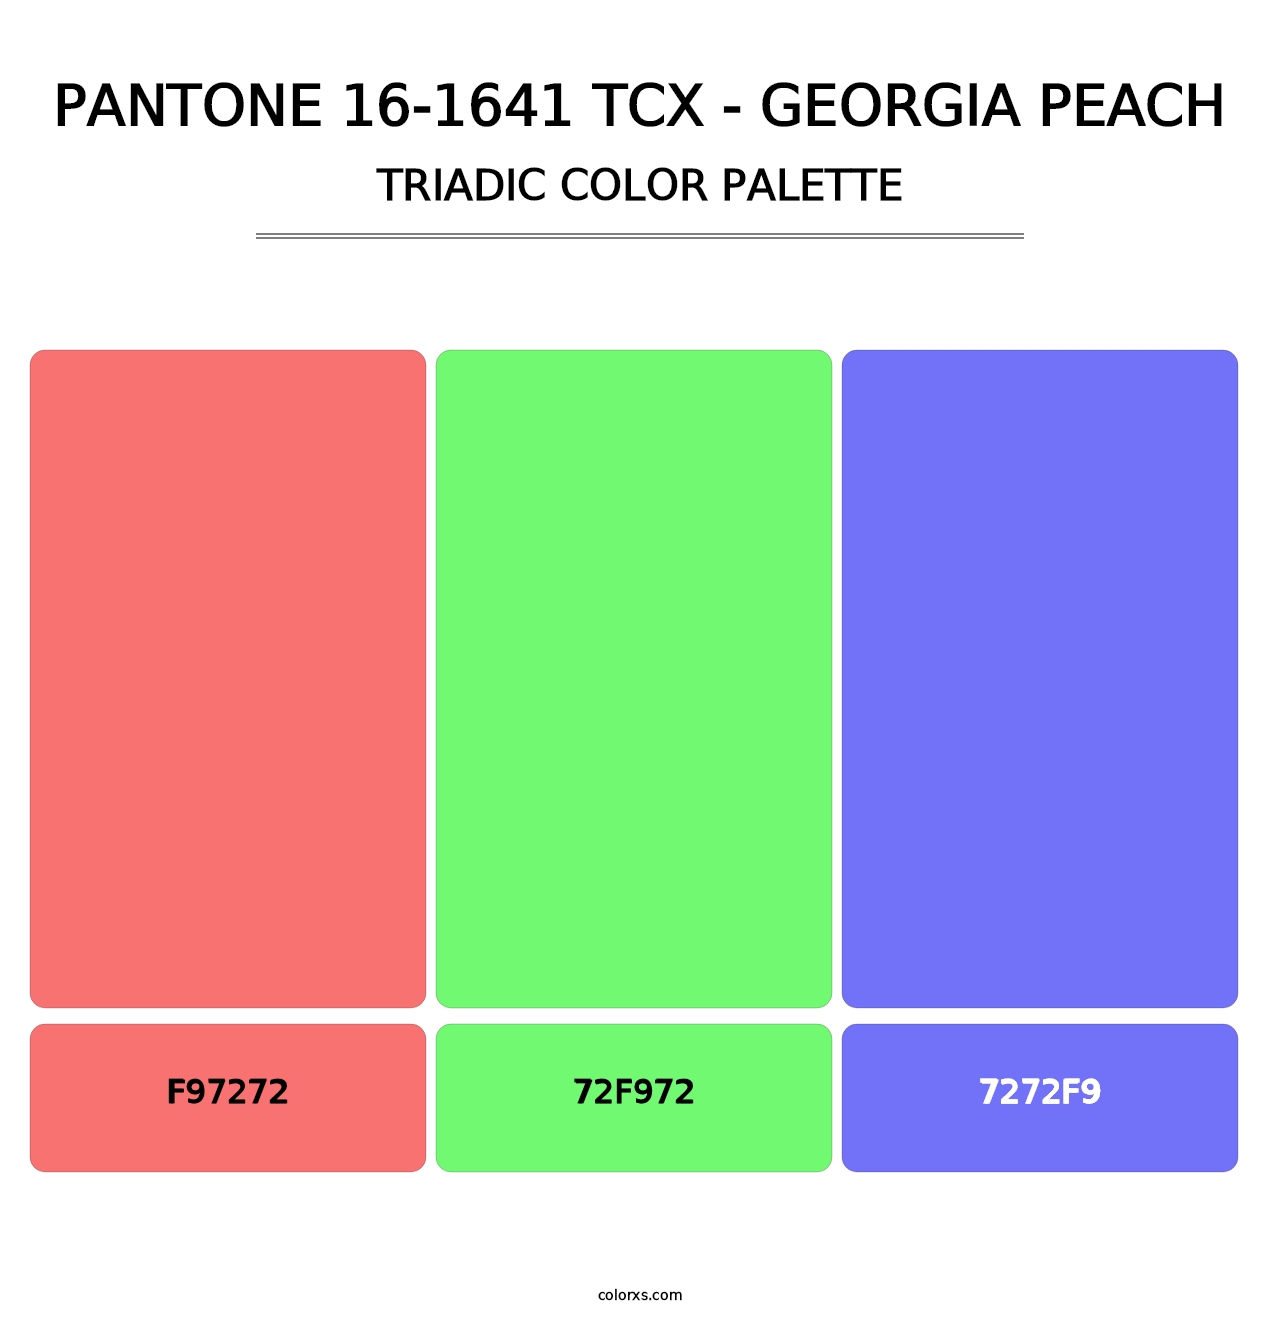 PANTONE 16-1641 TCX - Georgia Peach - Triadic Color Palette